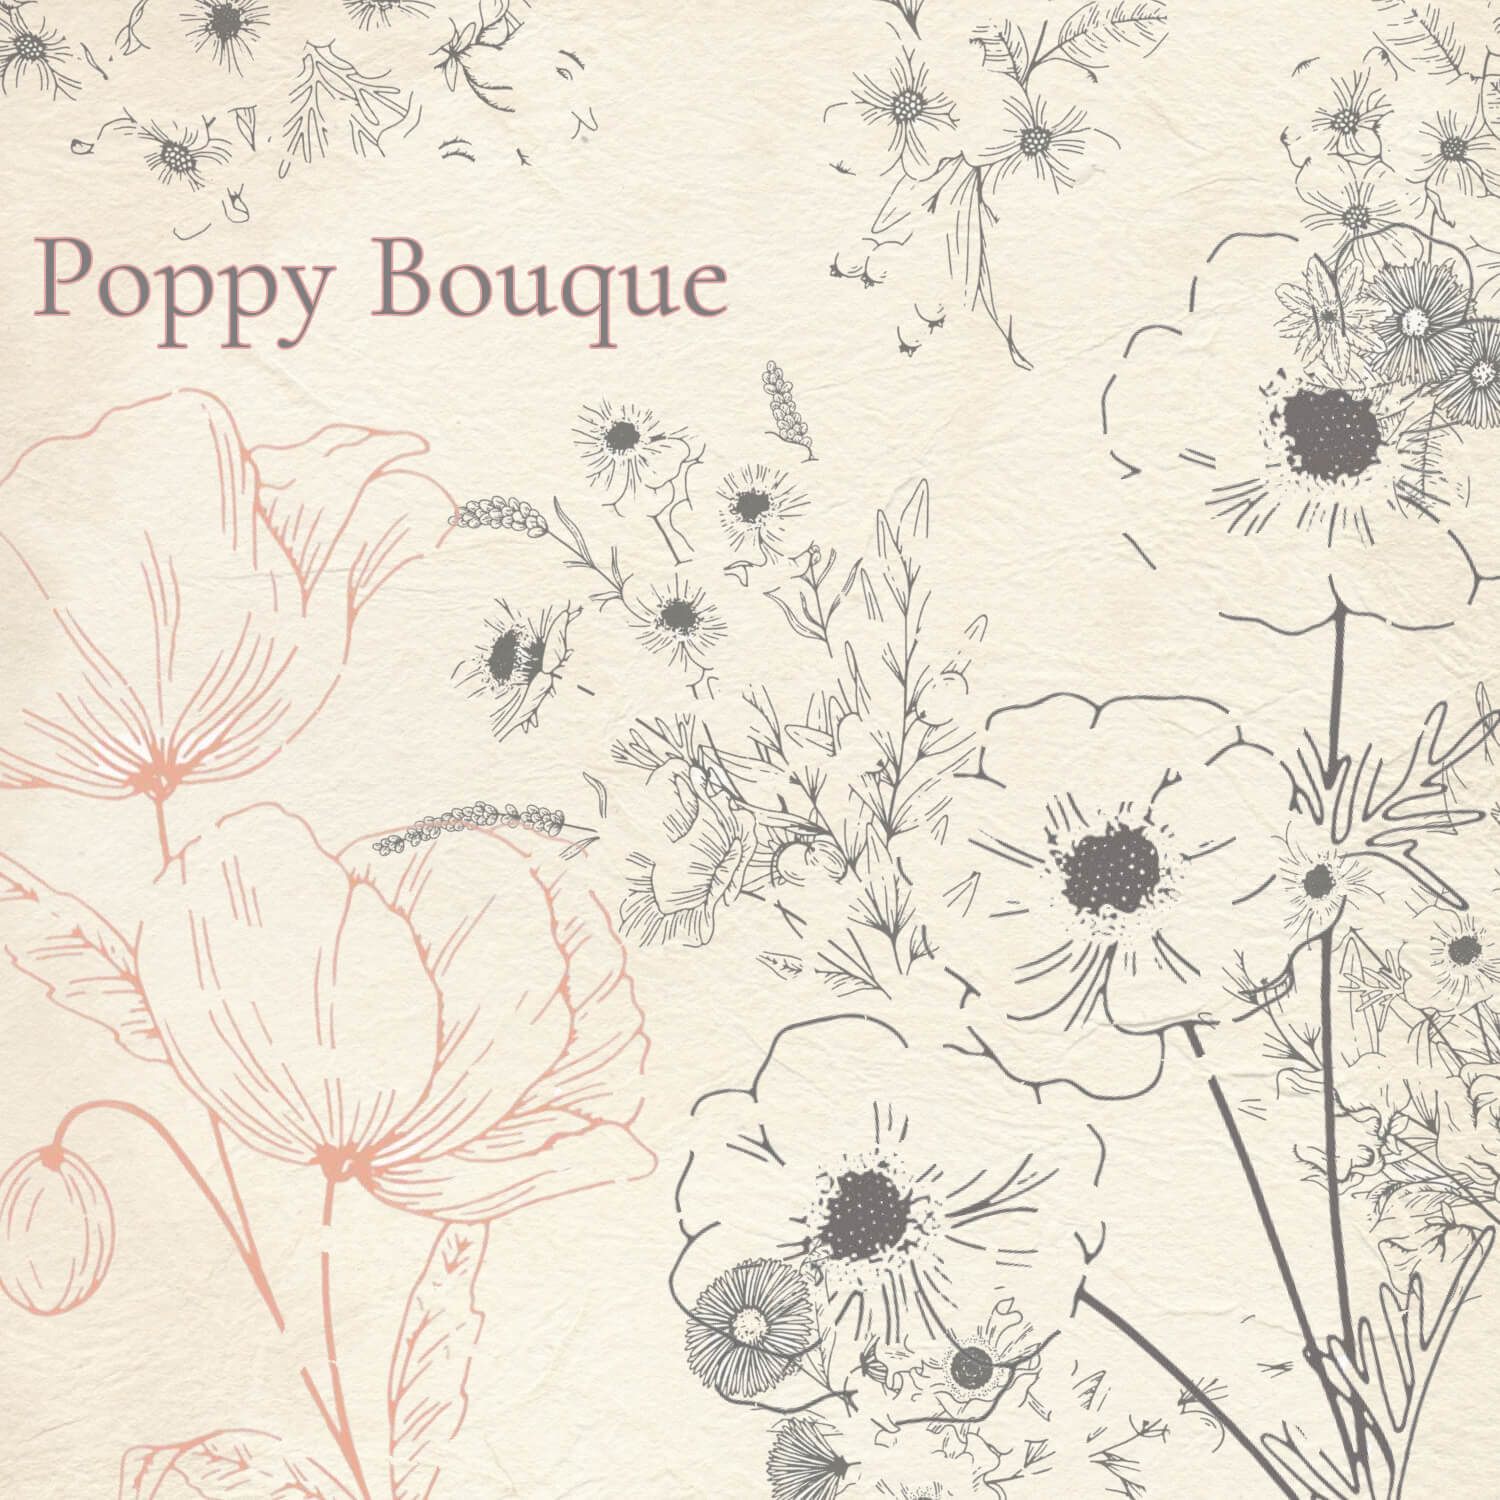 Poppy Bouque on Light Beige Background.